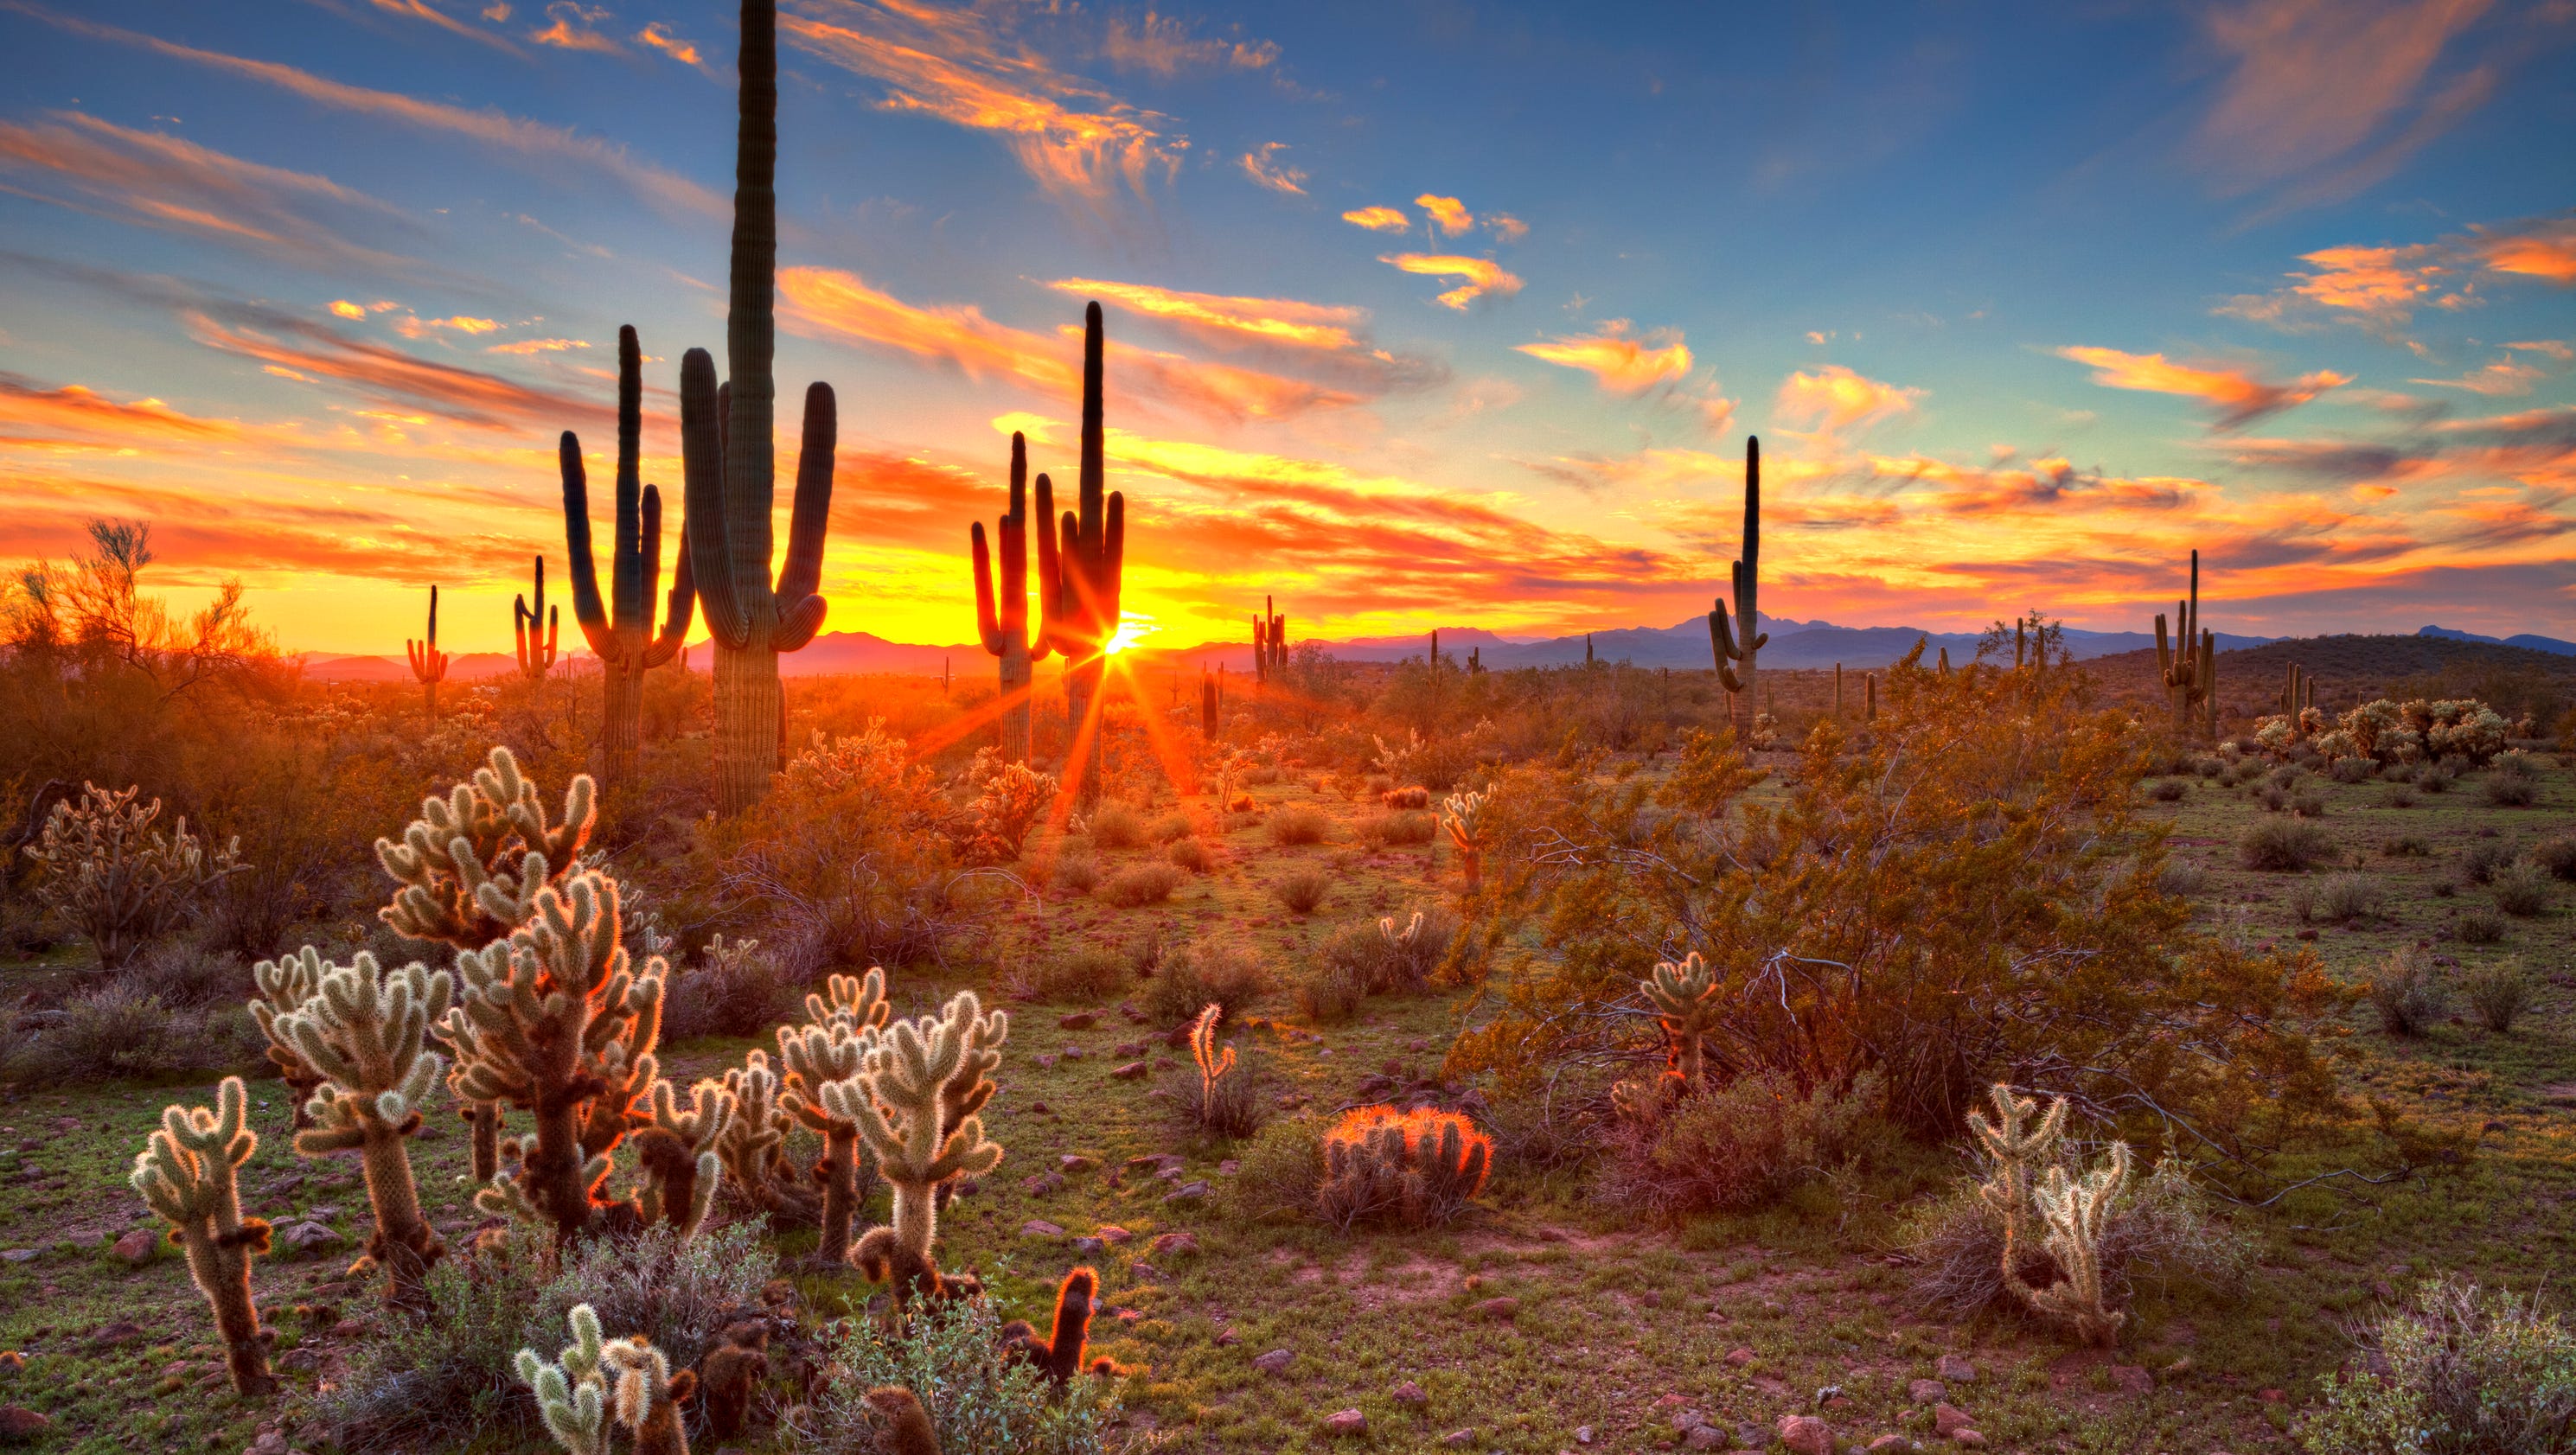 Why Arizona doesn't observe daylight saving time